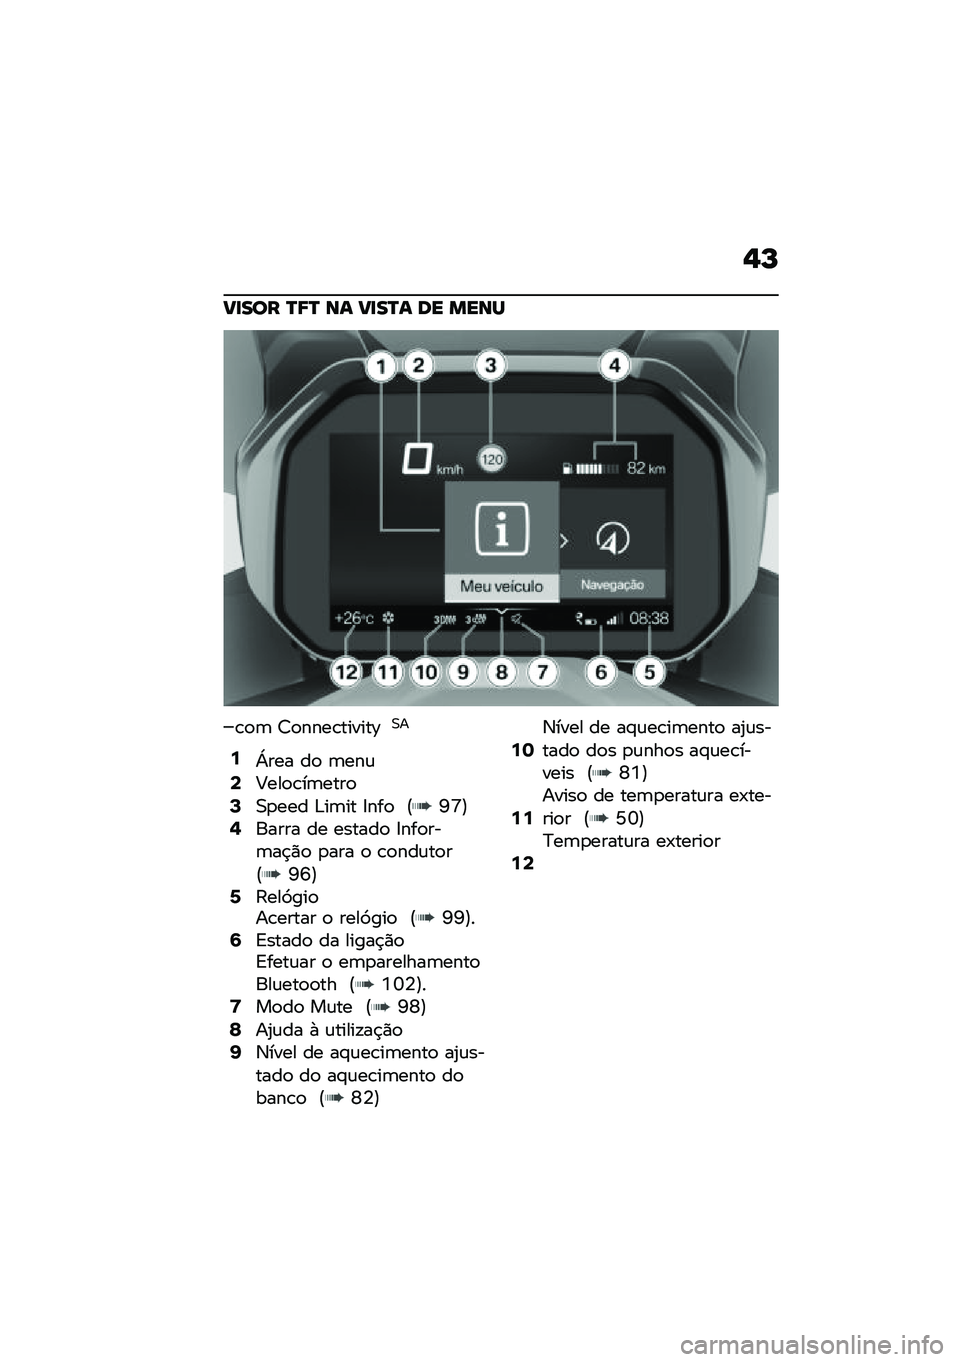 BMW MOTORRAD C 400 GT 2020  Manual do condutor (in Portuguese) �$�L
��
��� �P�8�P �� ��
��P� �� ����
�\b�
�	 �<�
����\b������D�0�
�7�a��� ��
 �	���\f�9�@���
�\b��	����
�;�0�
��� �&��	�� �=���
 �E�U�T�F�=����� �� 